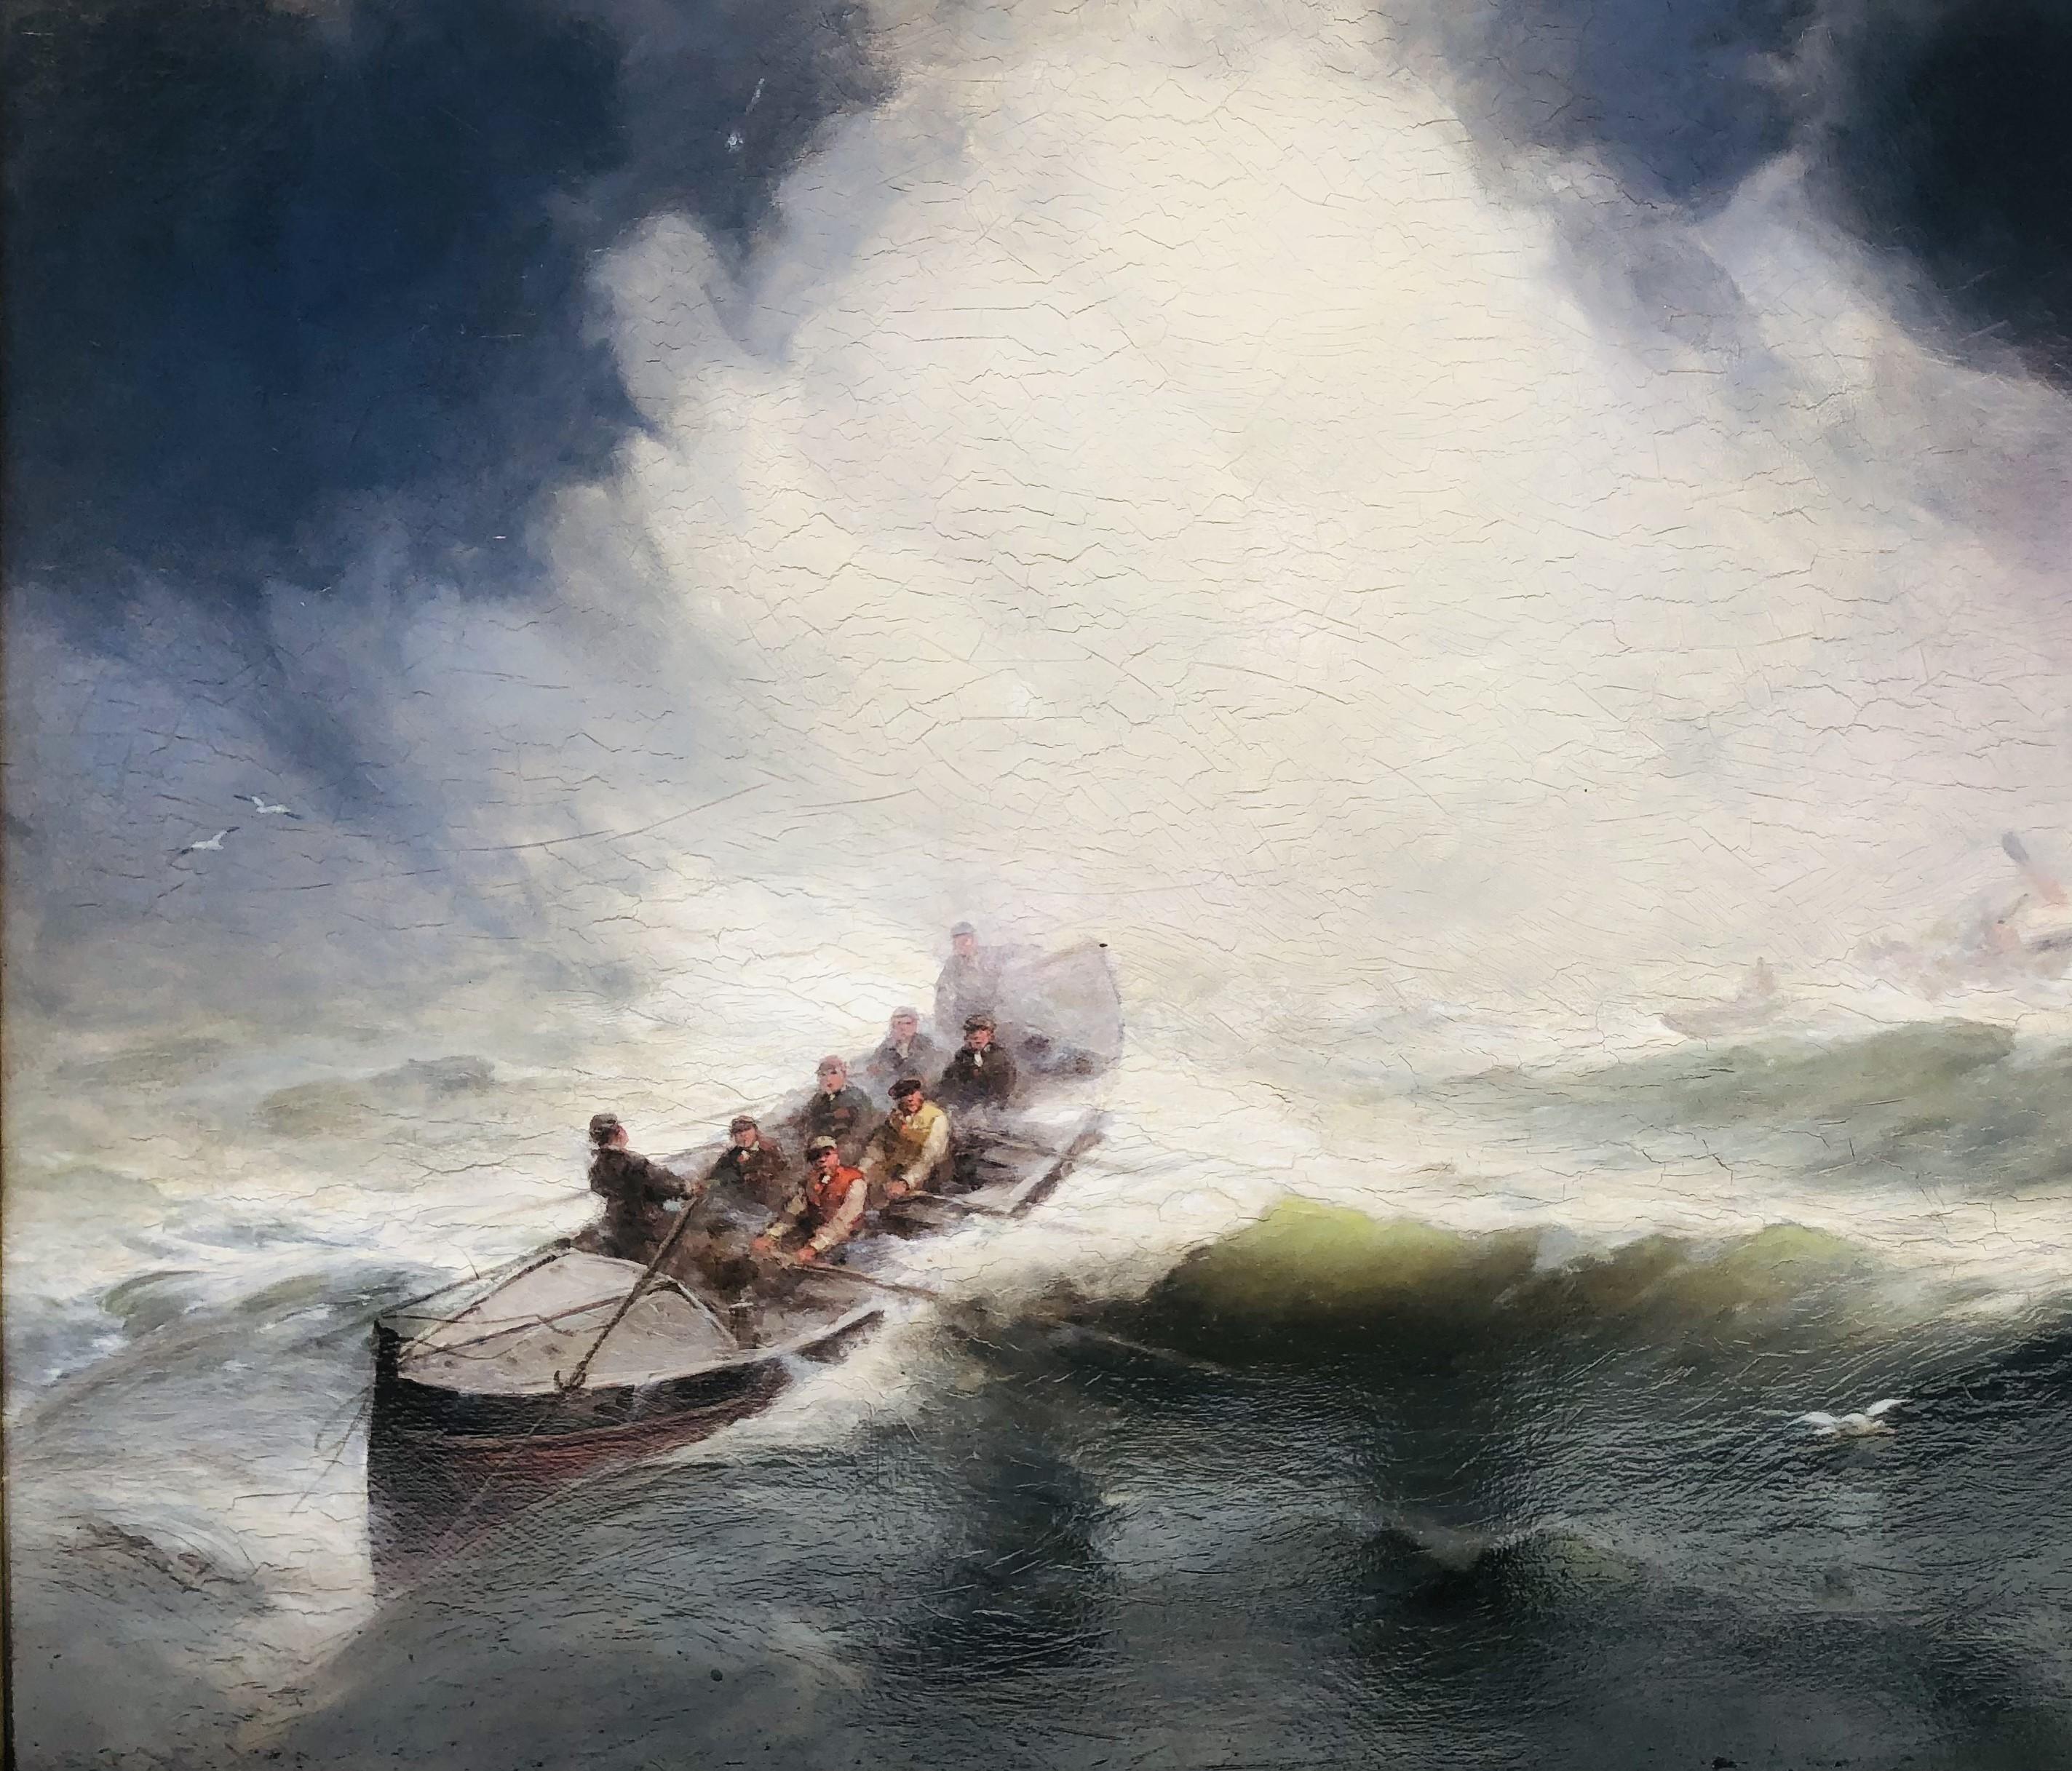 19th C New Jersey Surfmen Rescuing Foundering Ship - GW Nicholson - Hudson River School Painting by George Washington Nicholson